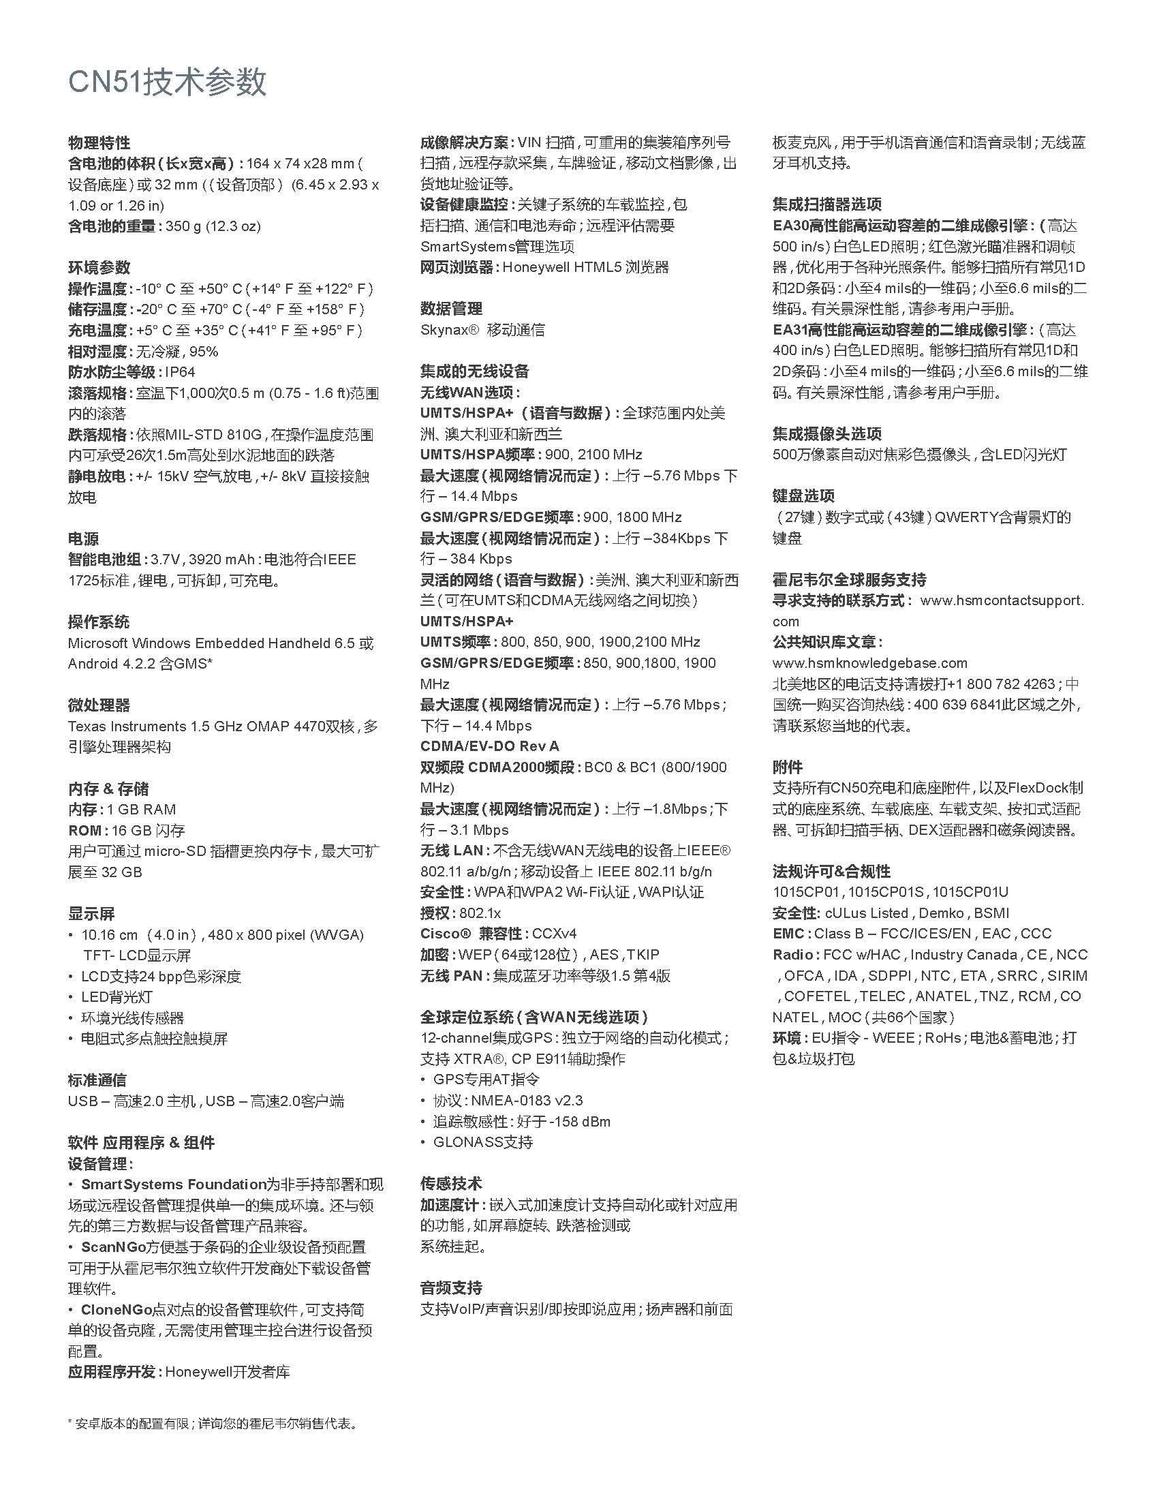 cn51-handheld-computer-data-sheet-cn_页面_2.jpg